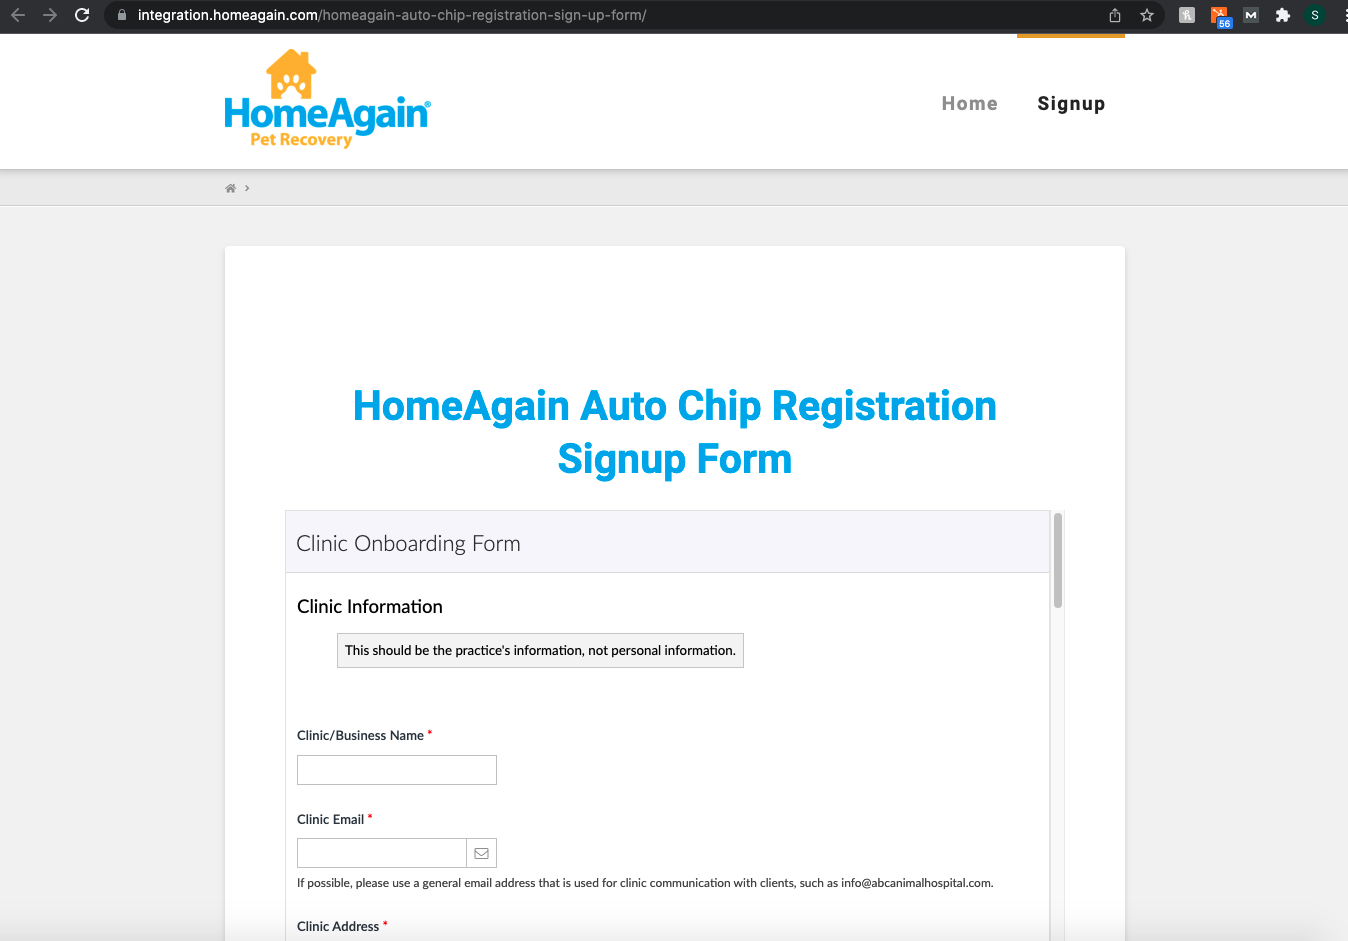 https://integration.homeagain.com/homeagain-auto-chip-registration-sign-up-form/